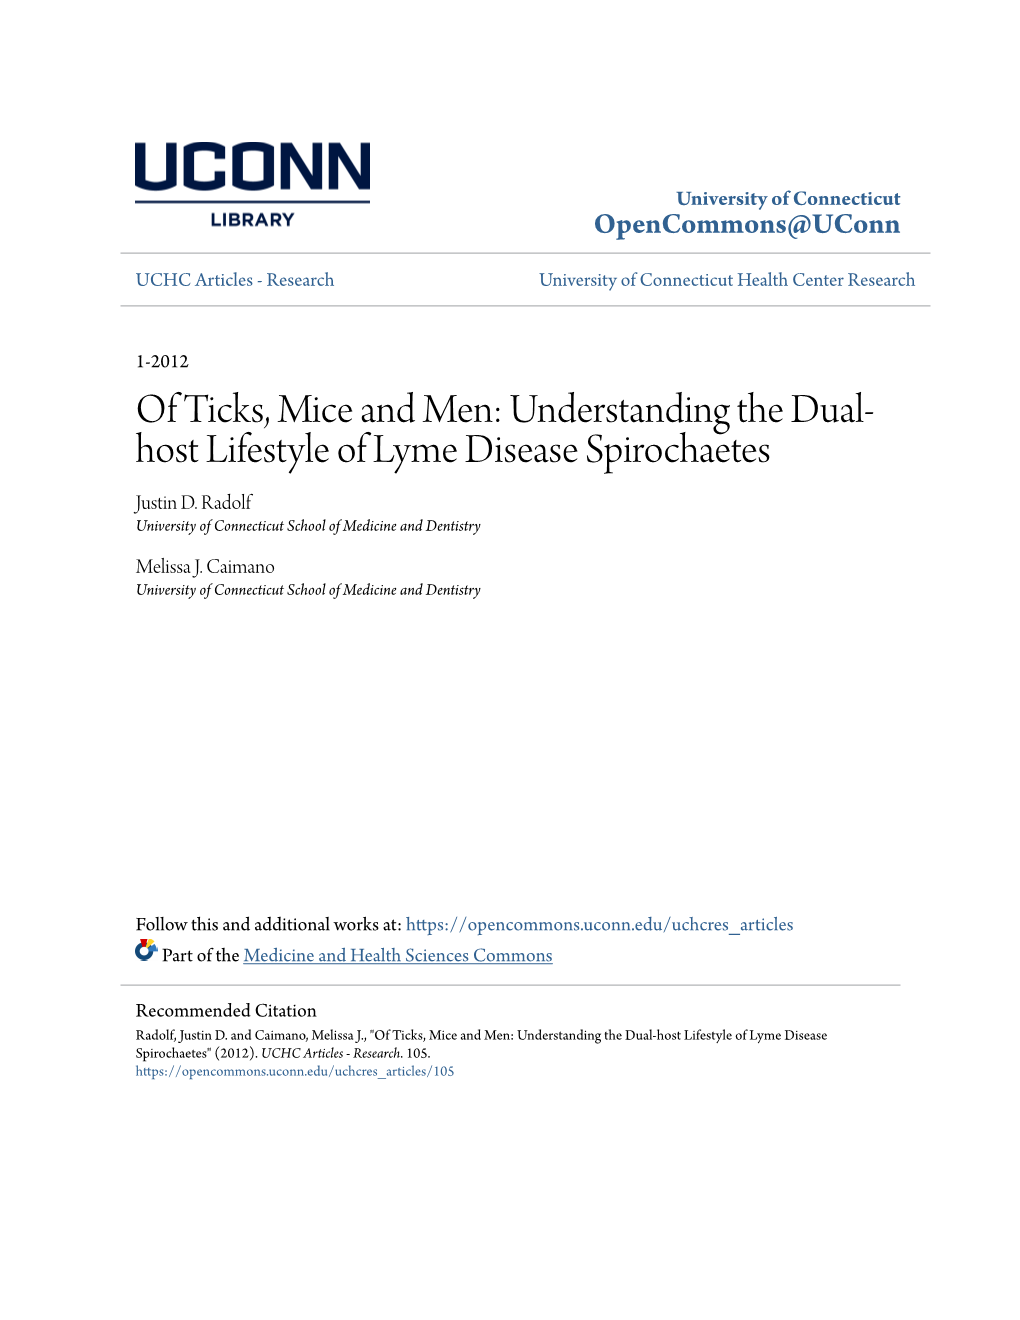 Understanding the Dual-Host Lifestyle of Lyme Disease Spirochaetes" (2012)